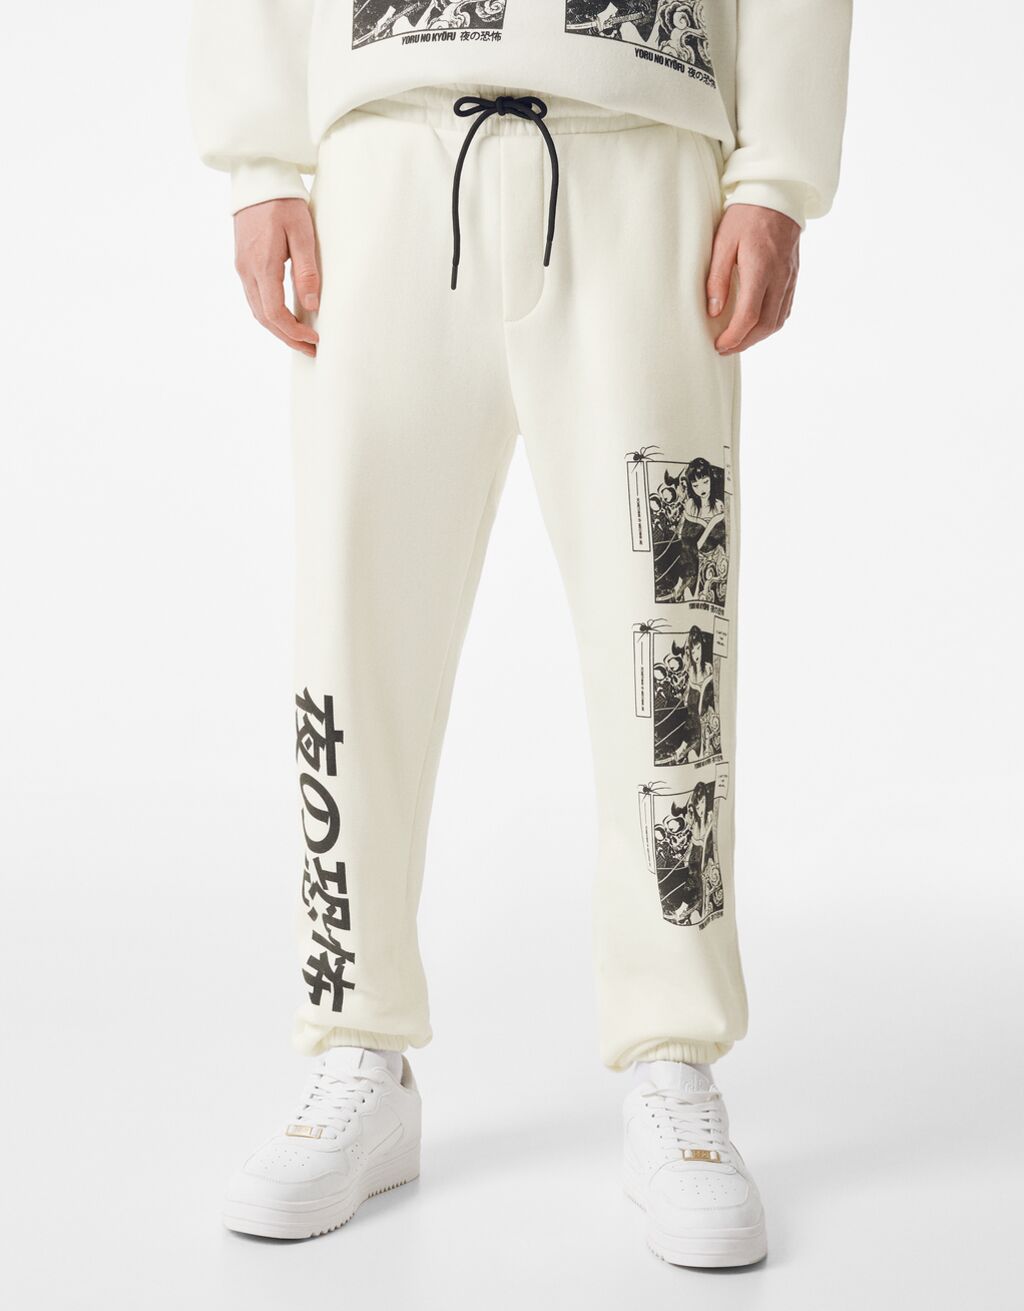 Plush oversize sweatpants with an anime print